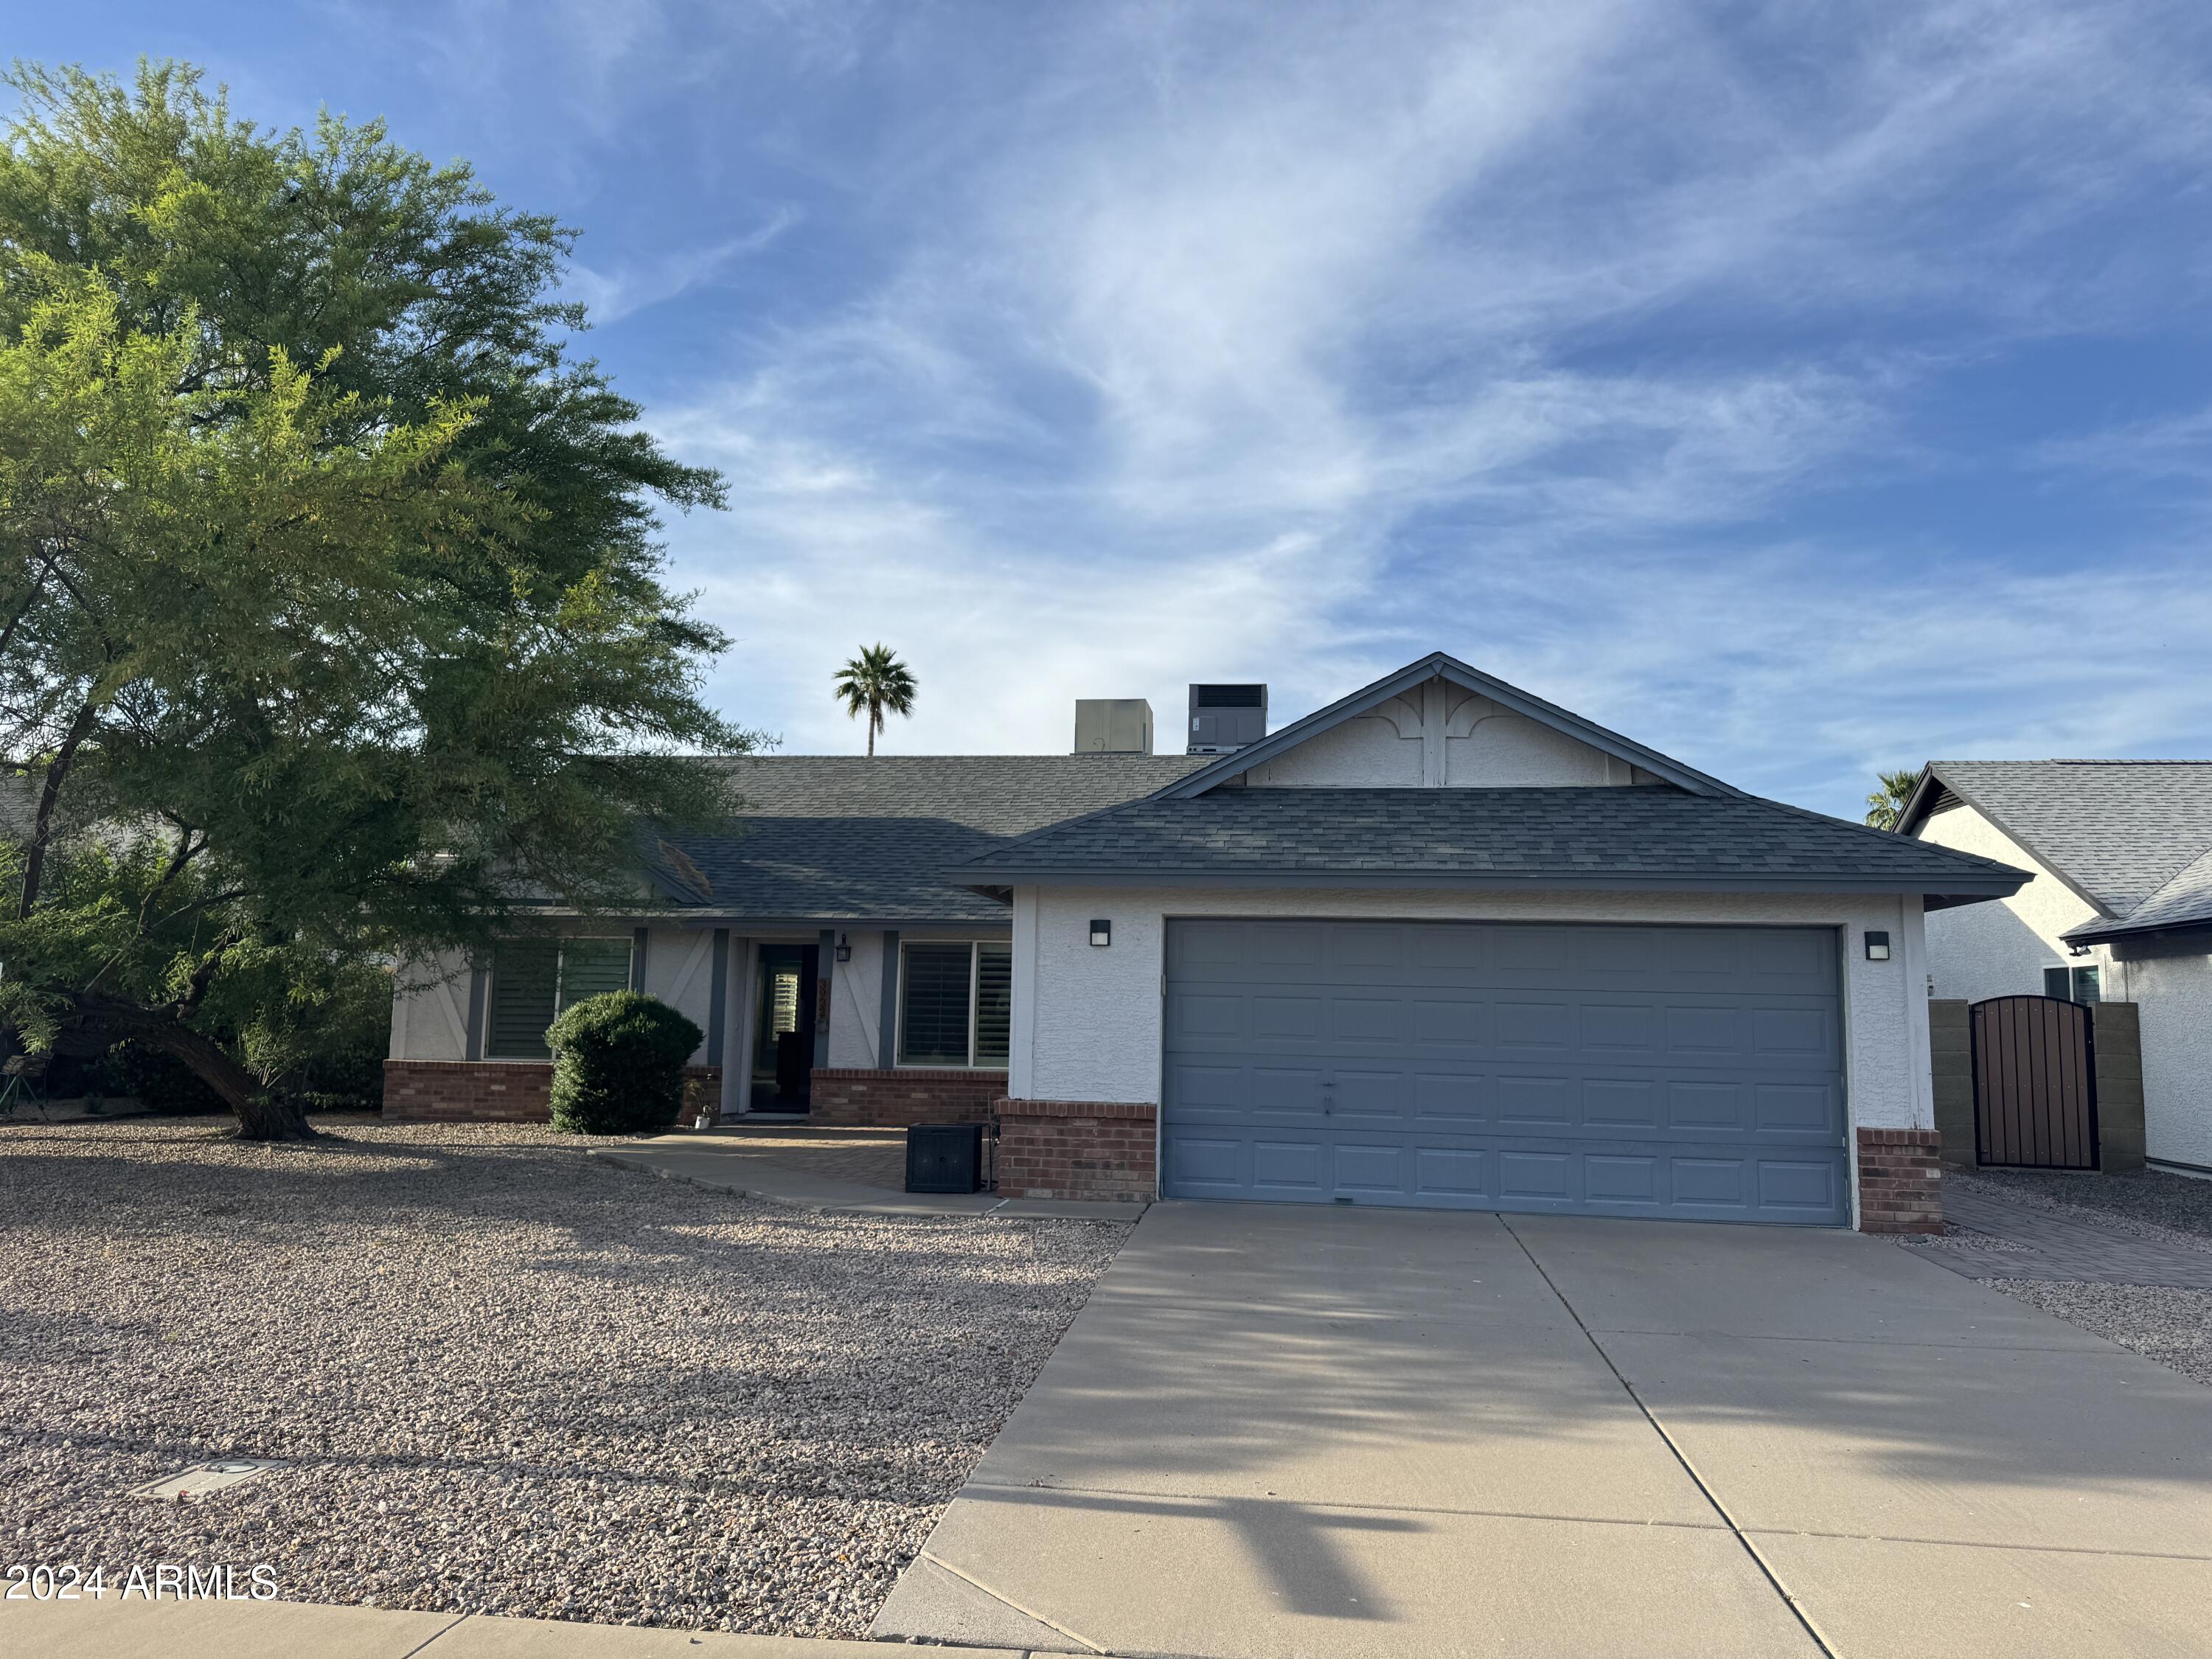 View Chandler, AZ 85226 house